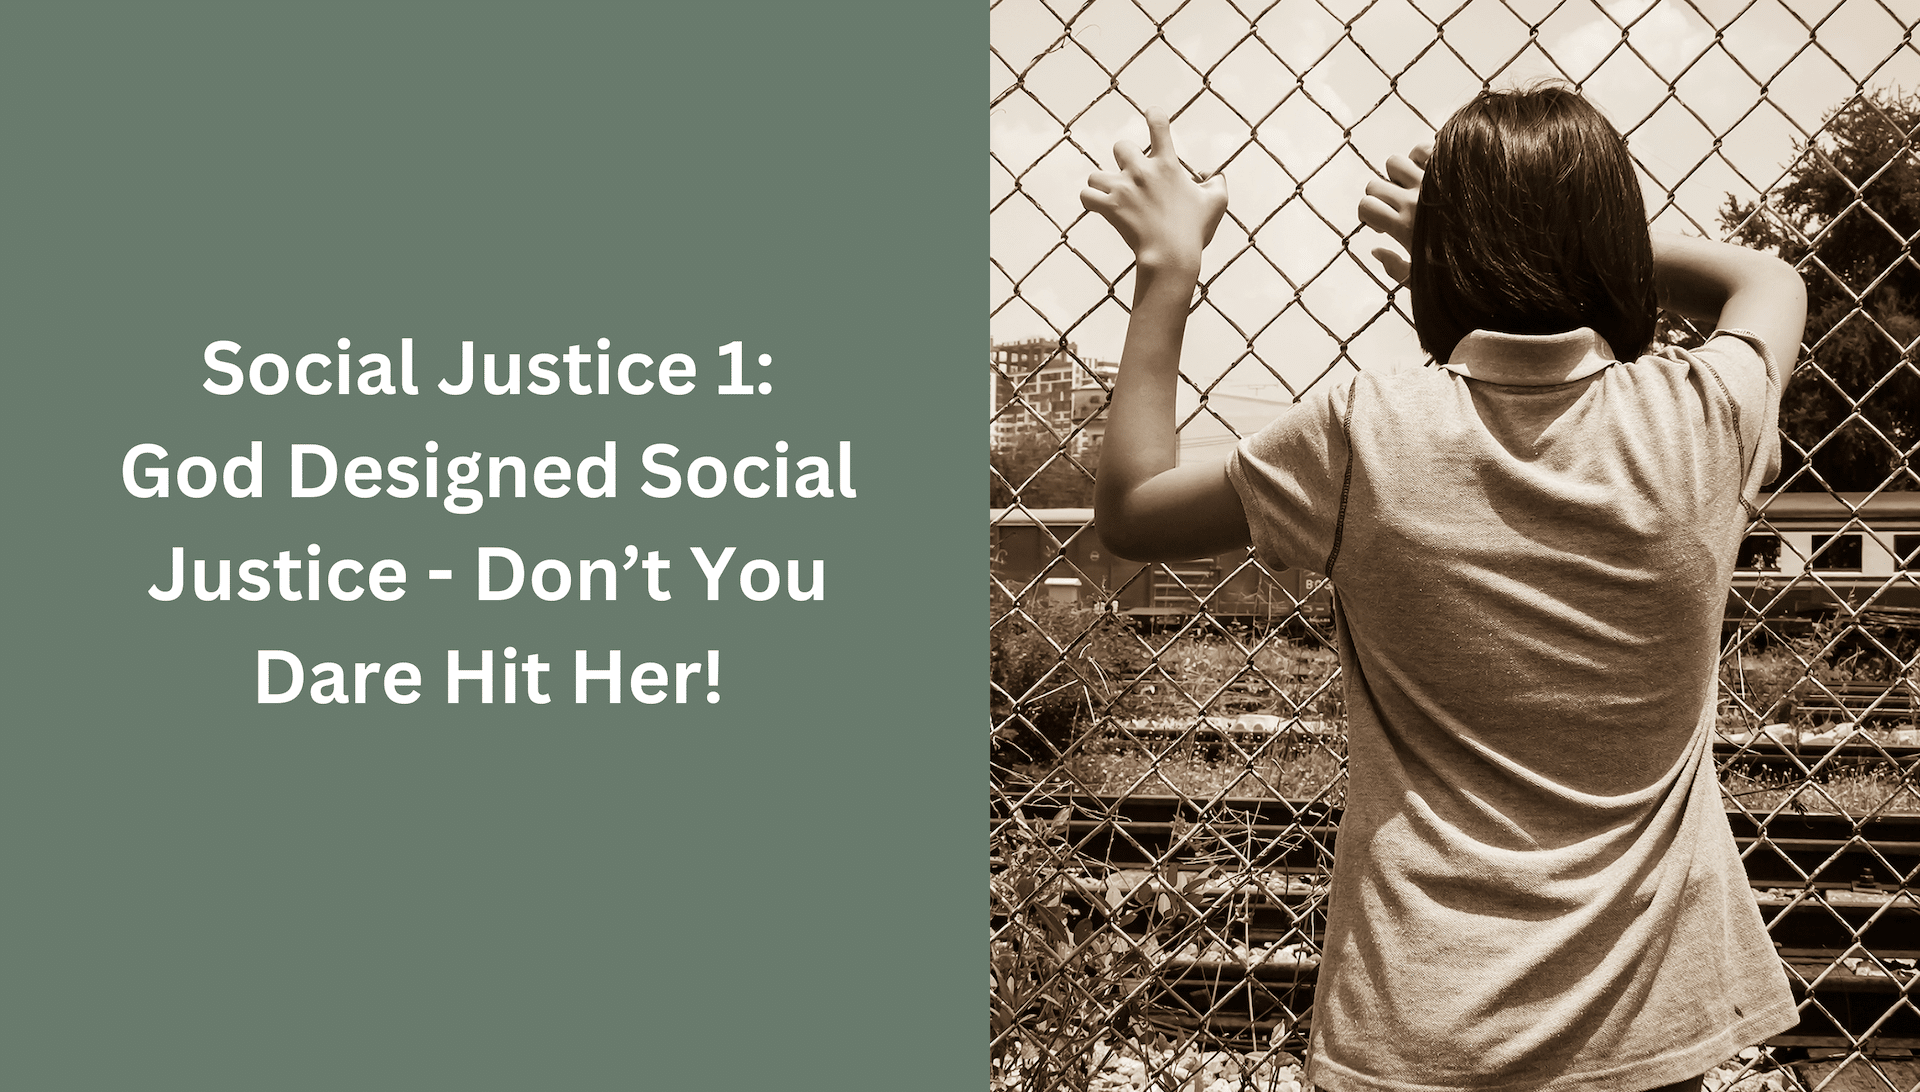 Social justice 1: God designed social justice - don't you dare hit her!